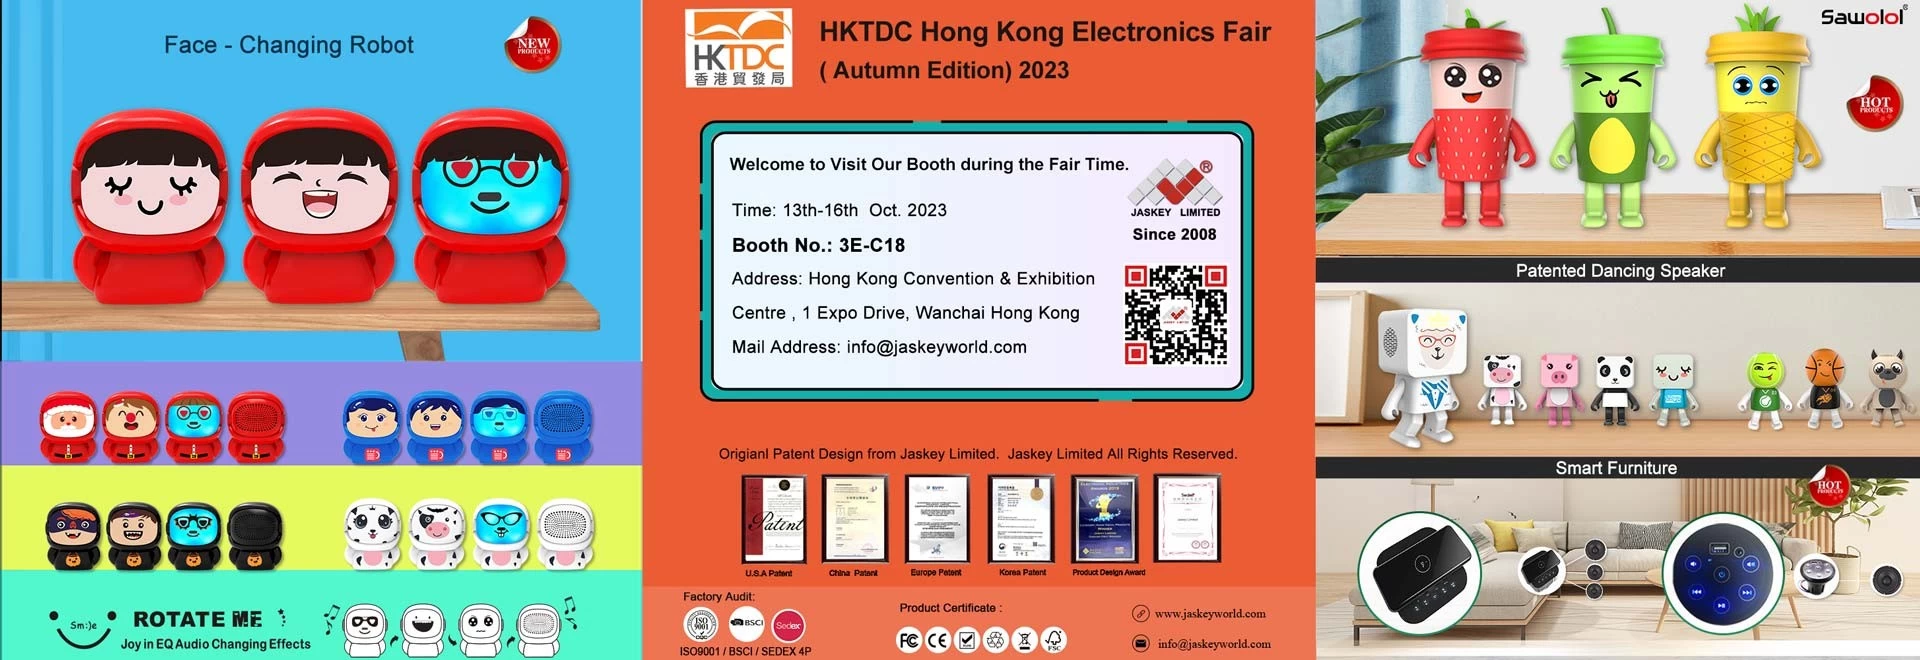 HKTDC Hong Kong Electronics Fair (Autumn Edition)2023